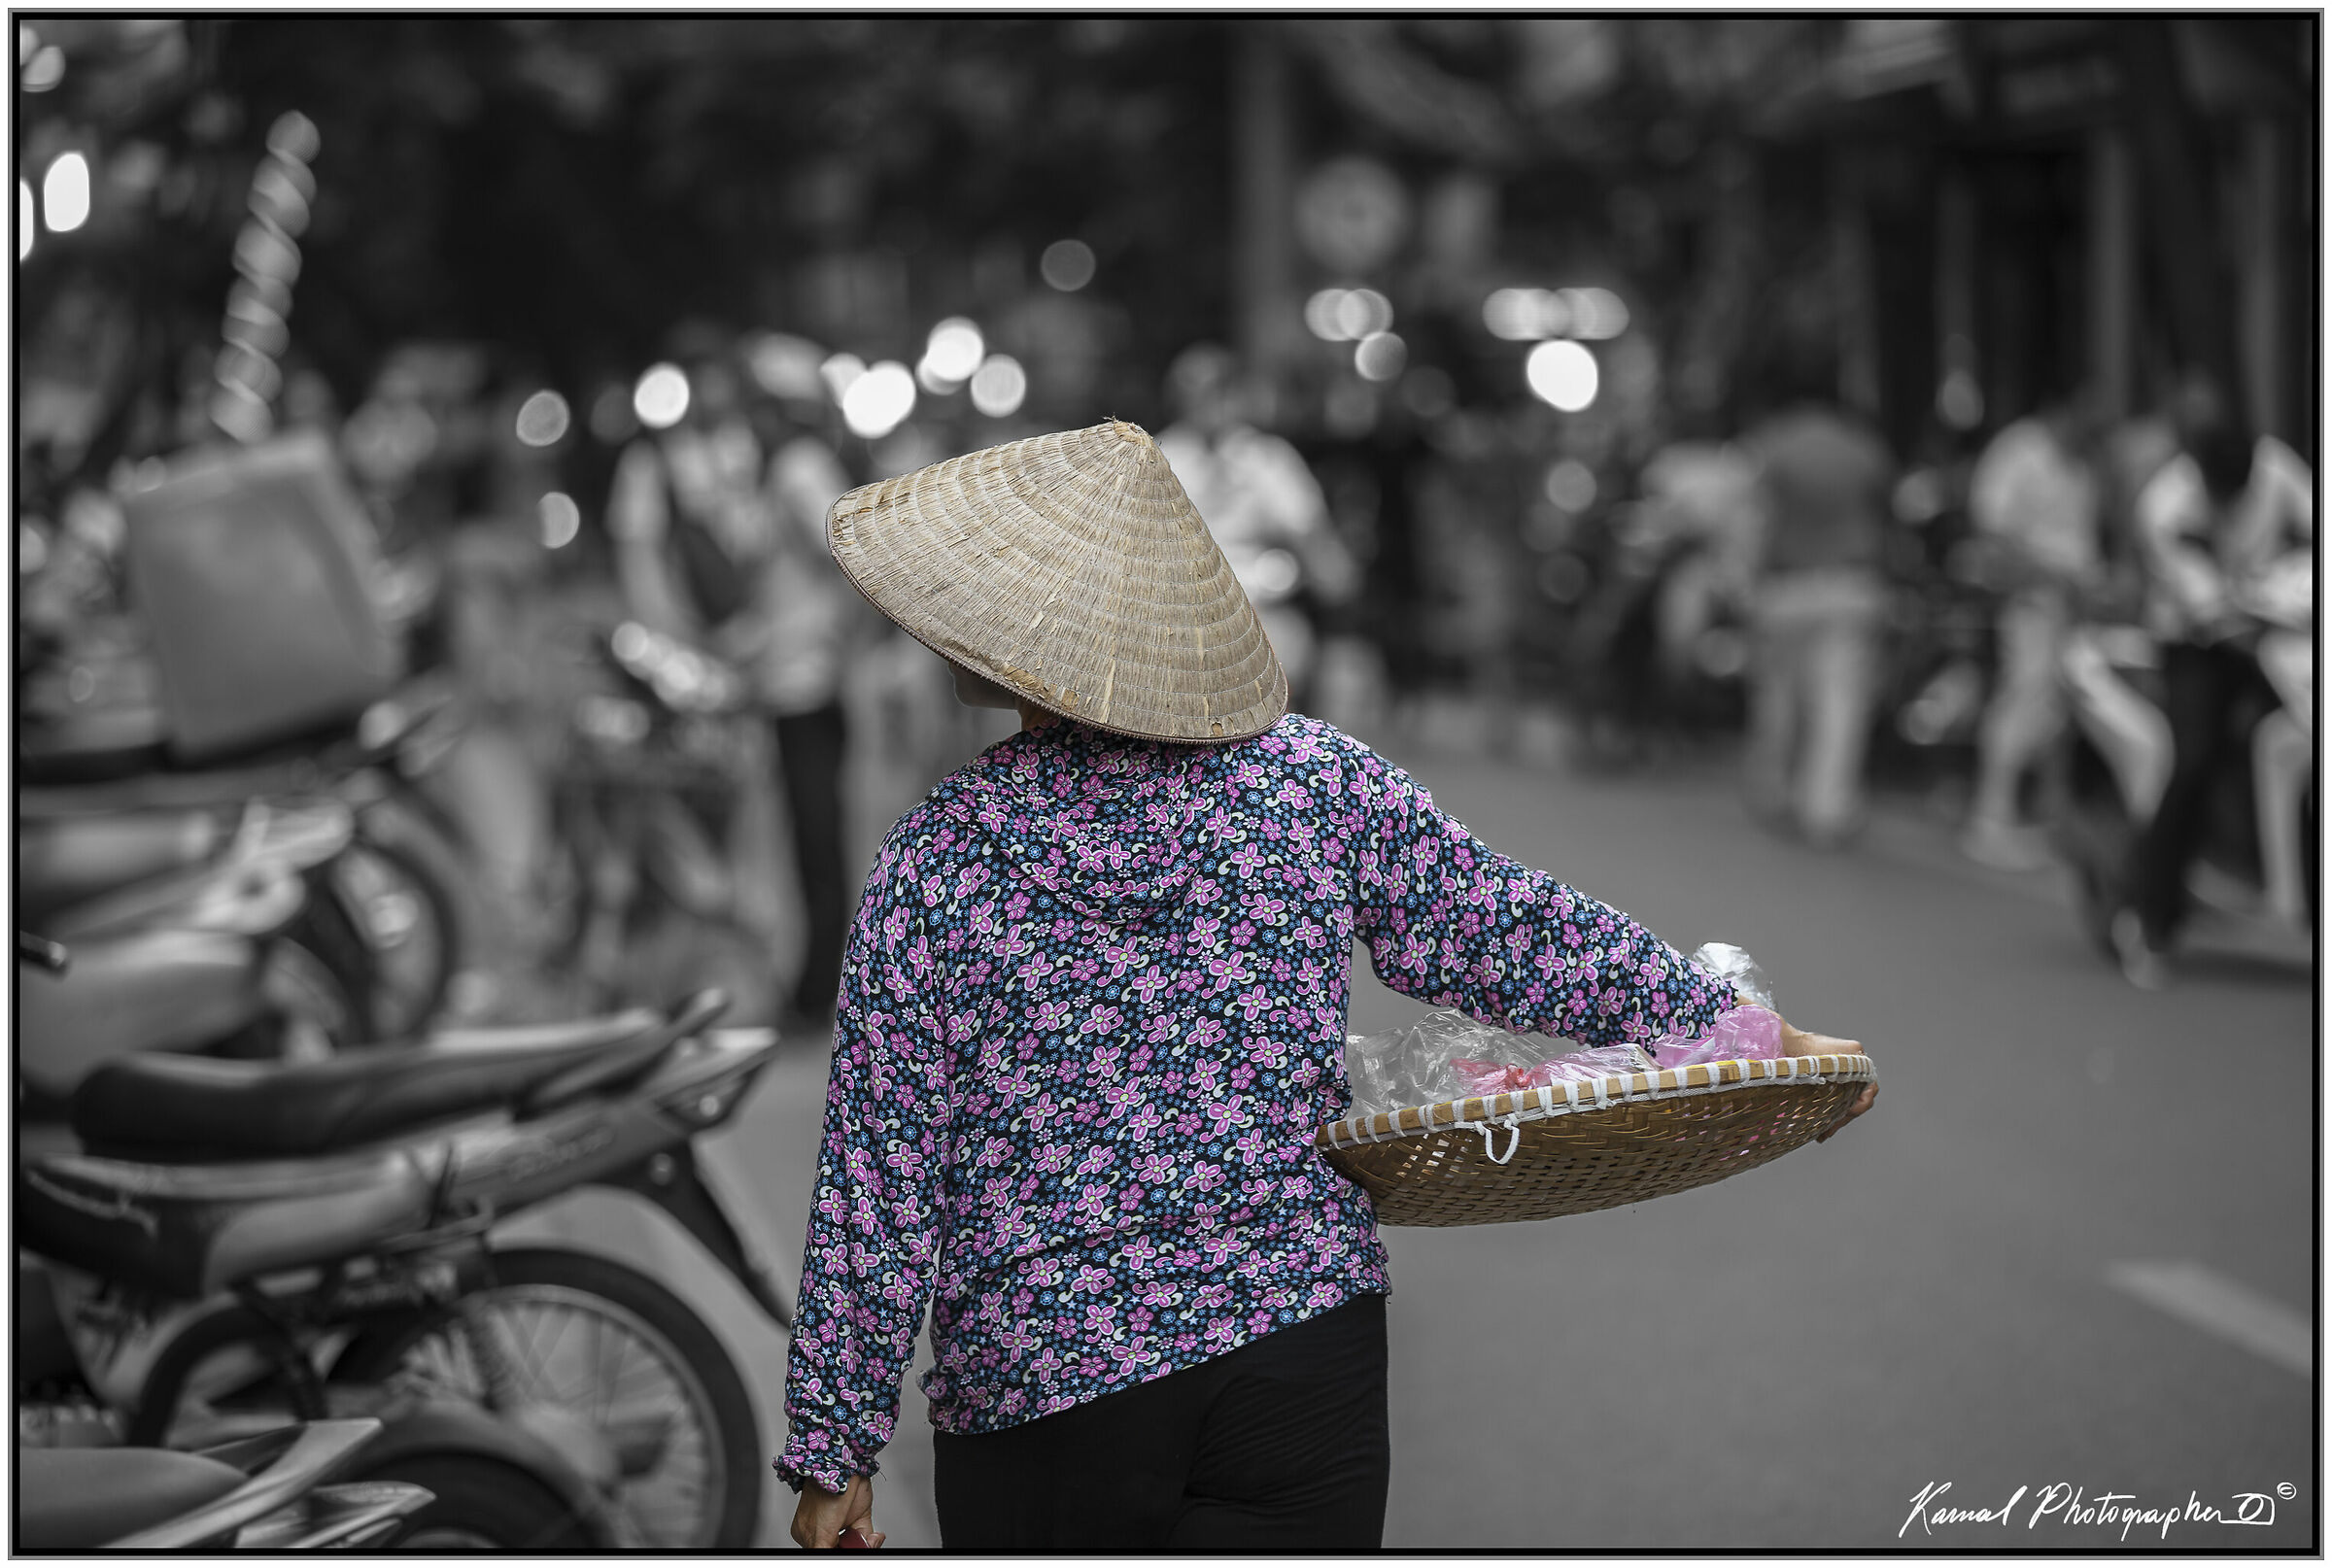 On the streets of Hanoi...